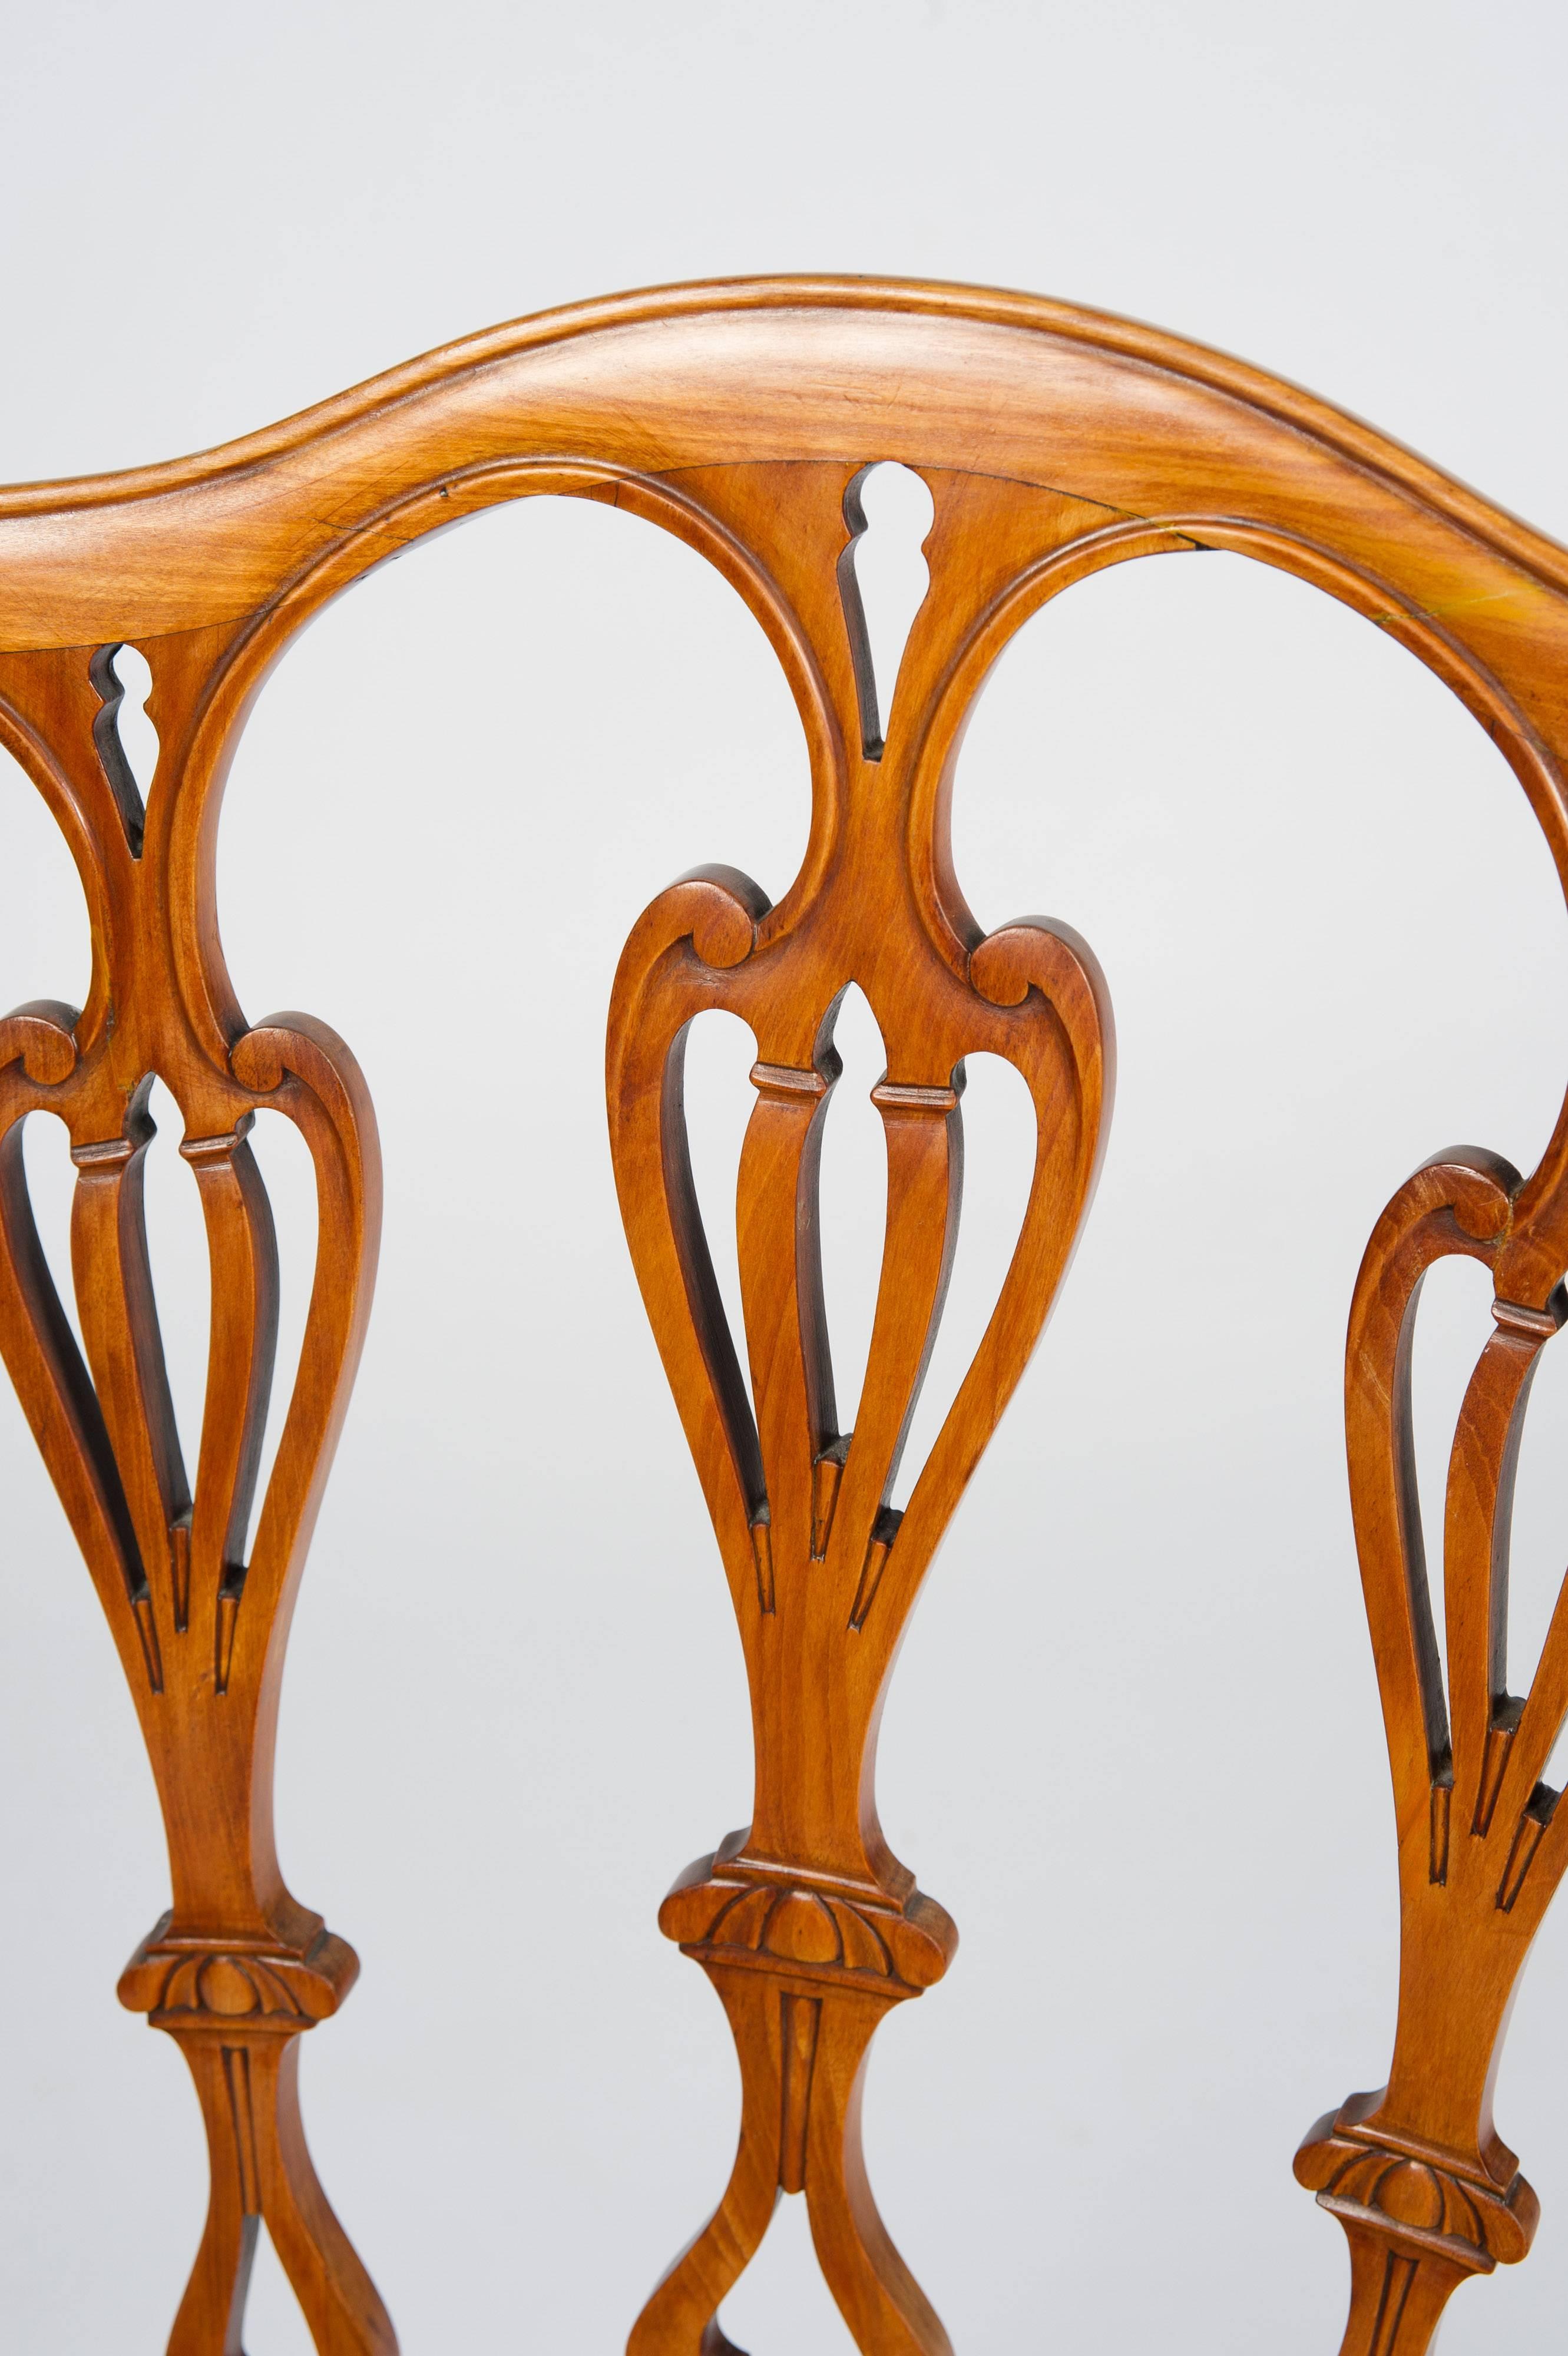 Rare Pair of George II Period Satinwood Chairs 1